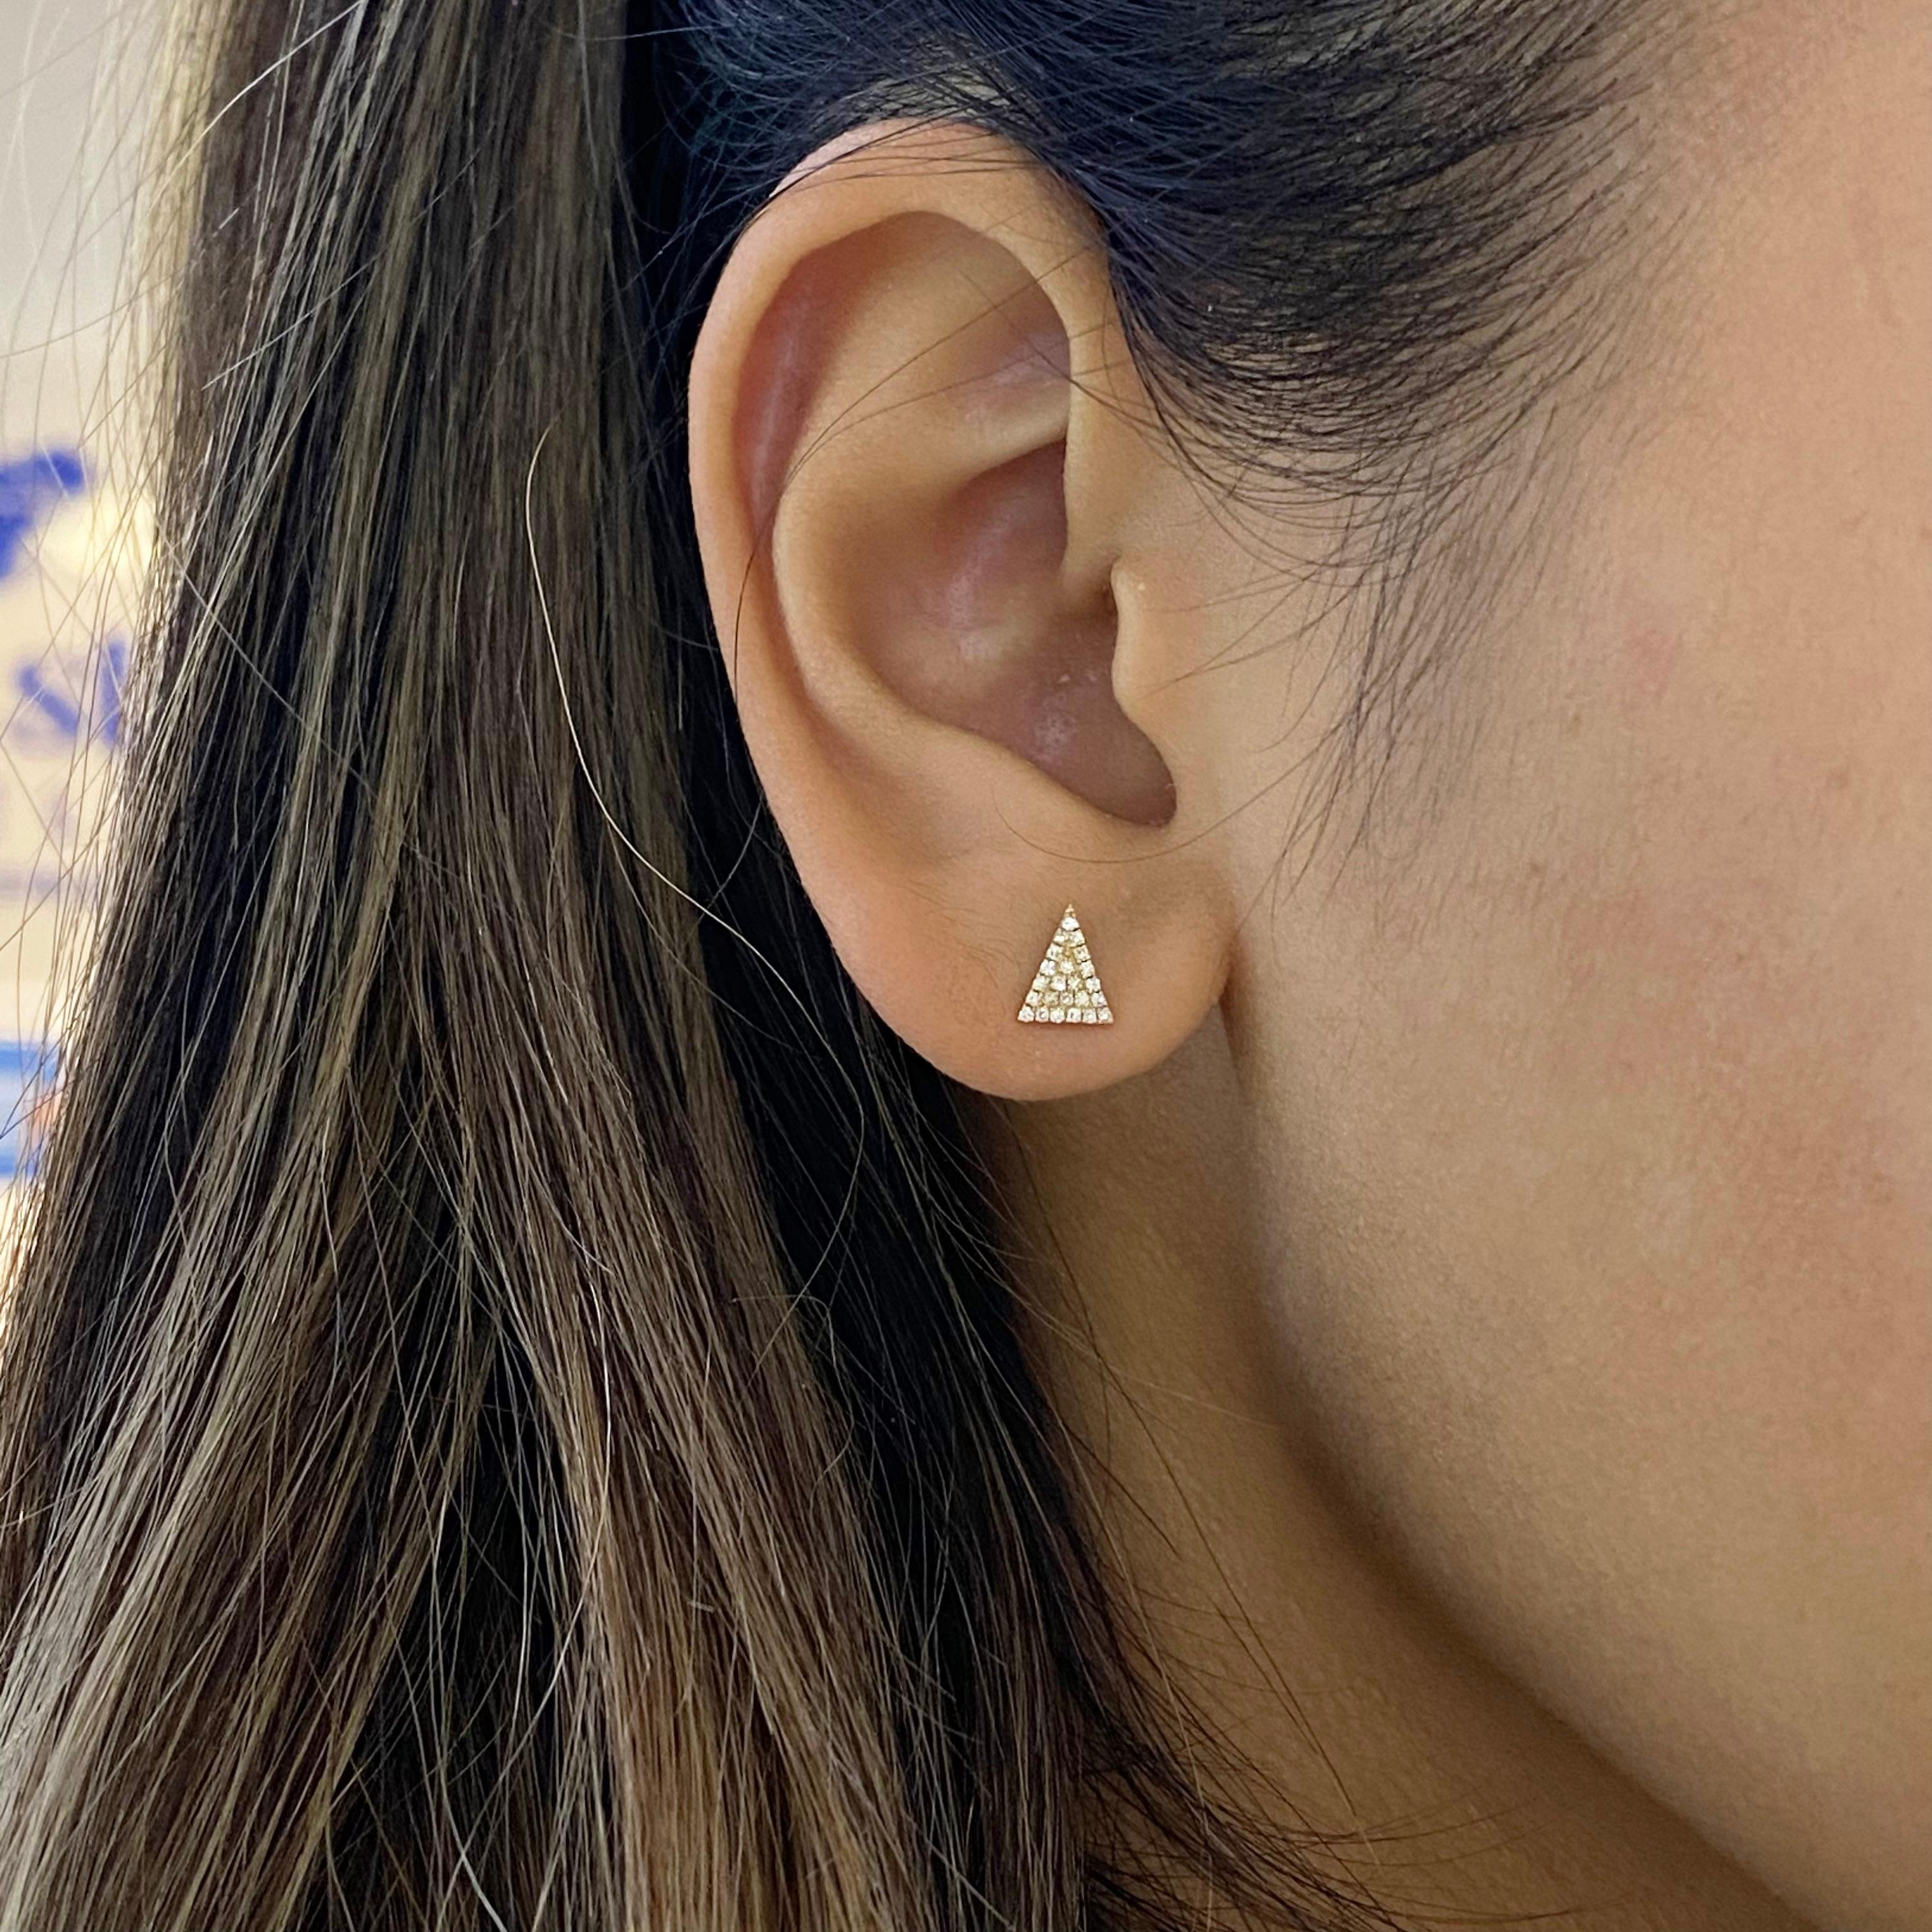 Round Cut Pave Diamond Triangle Stud Earrings in 14K Yellow Gold 1/10 Carat Diamond Studs